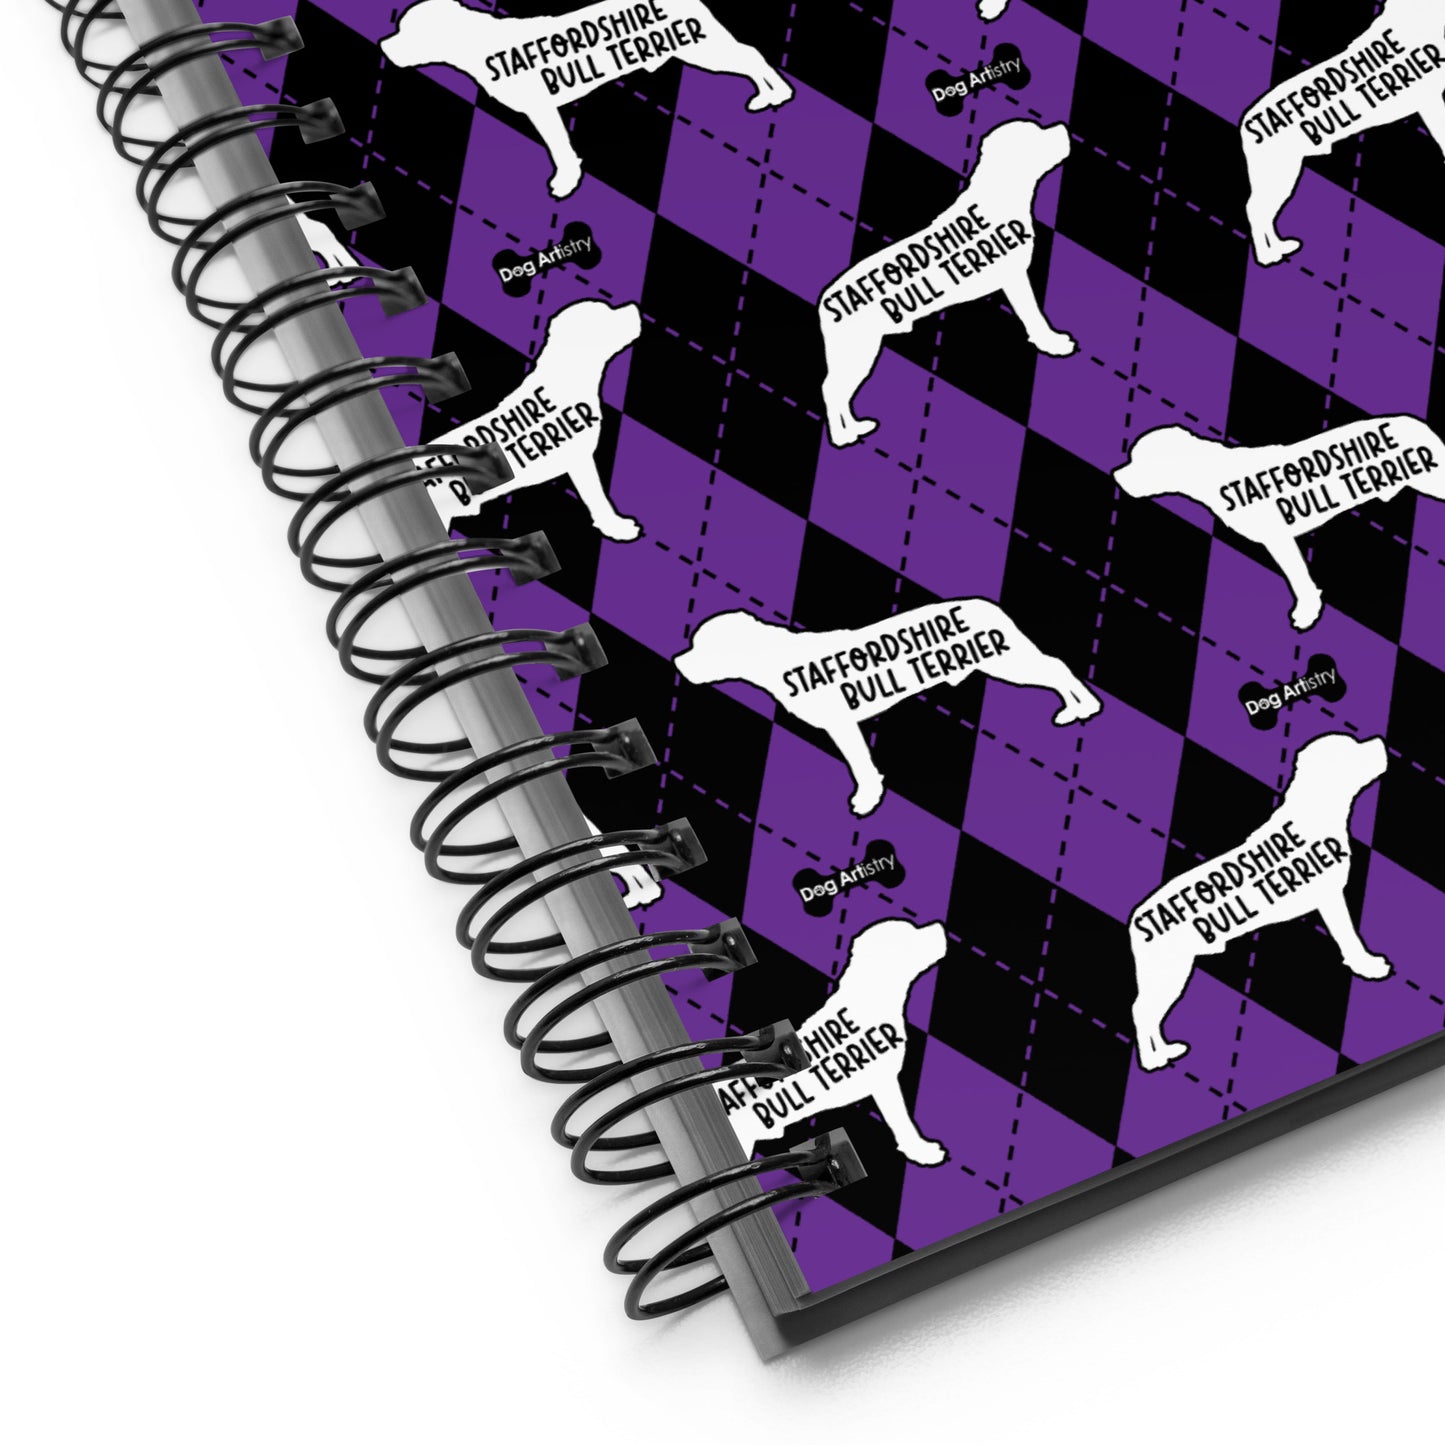 Staffordshire Bull Terrier Argyle Purple and Black Spiral Notebooks